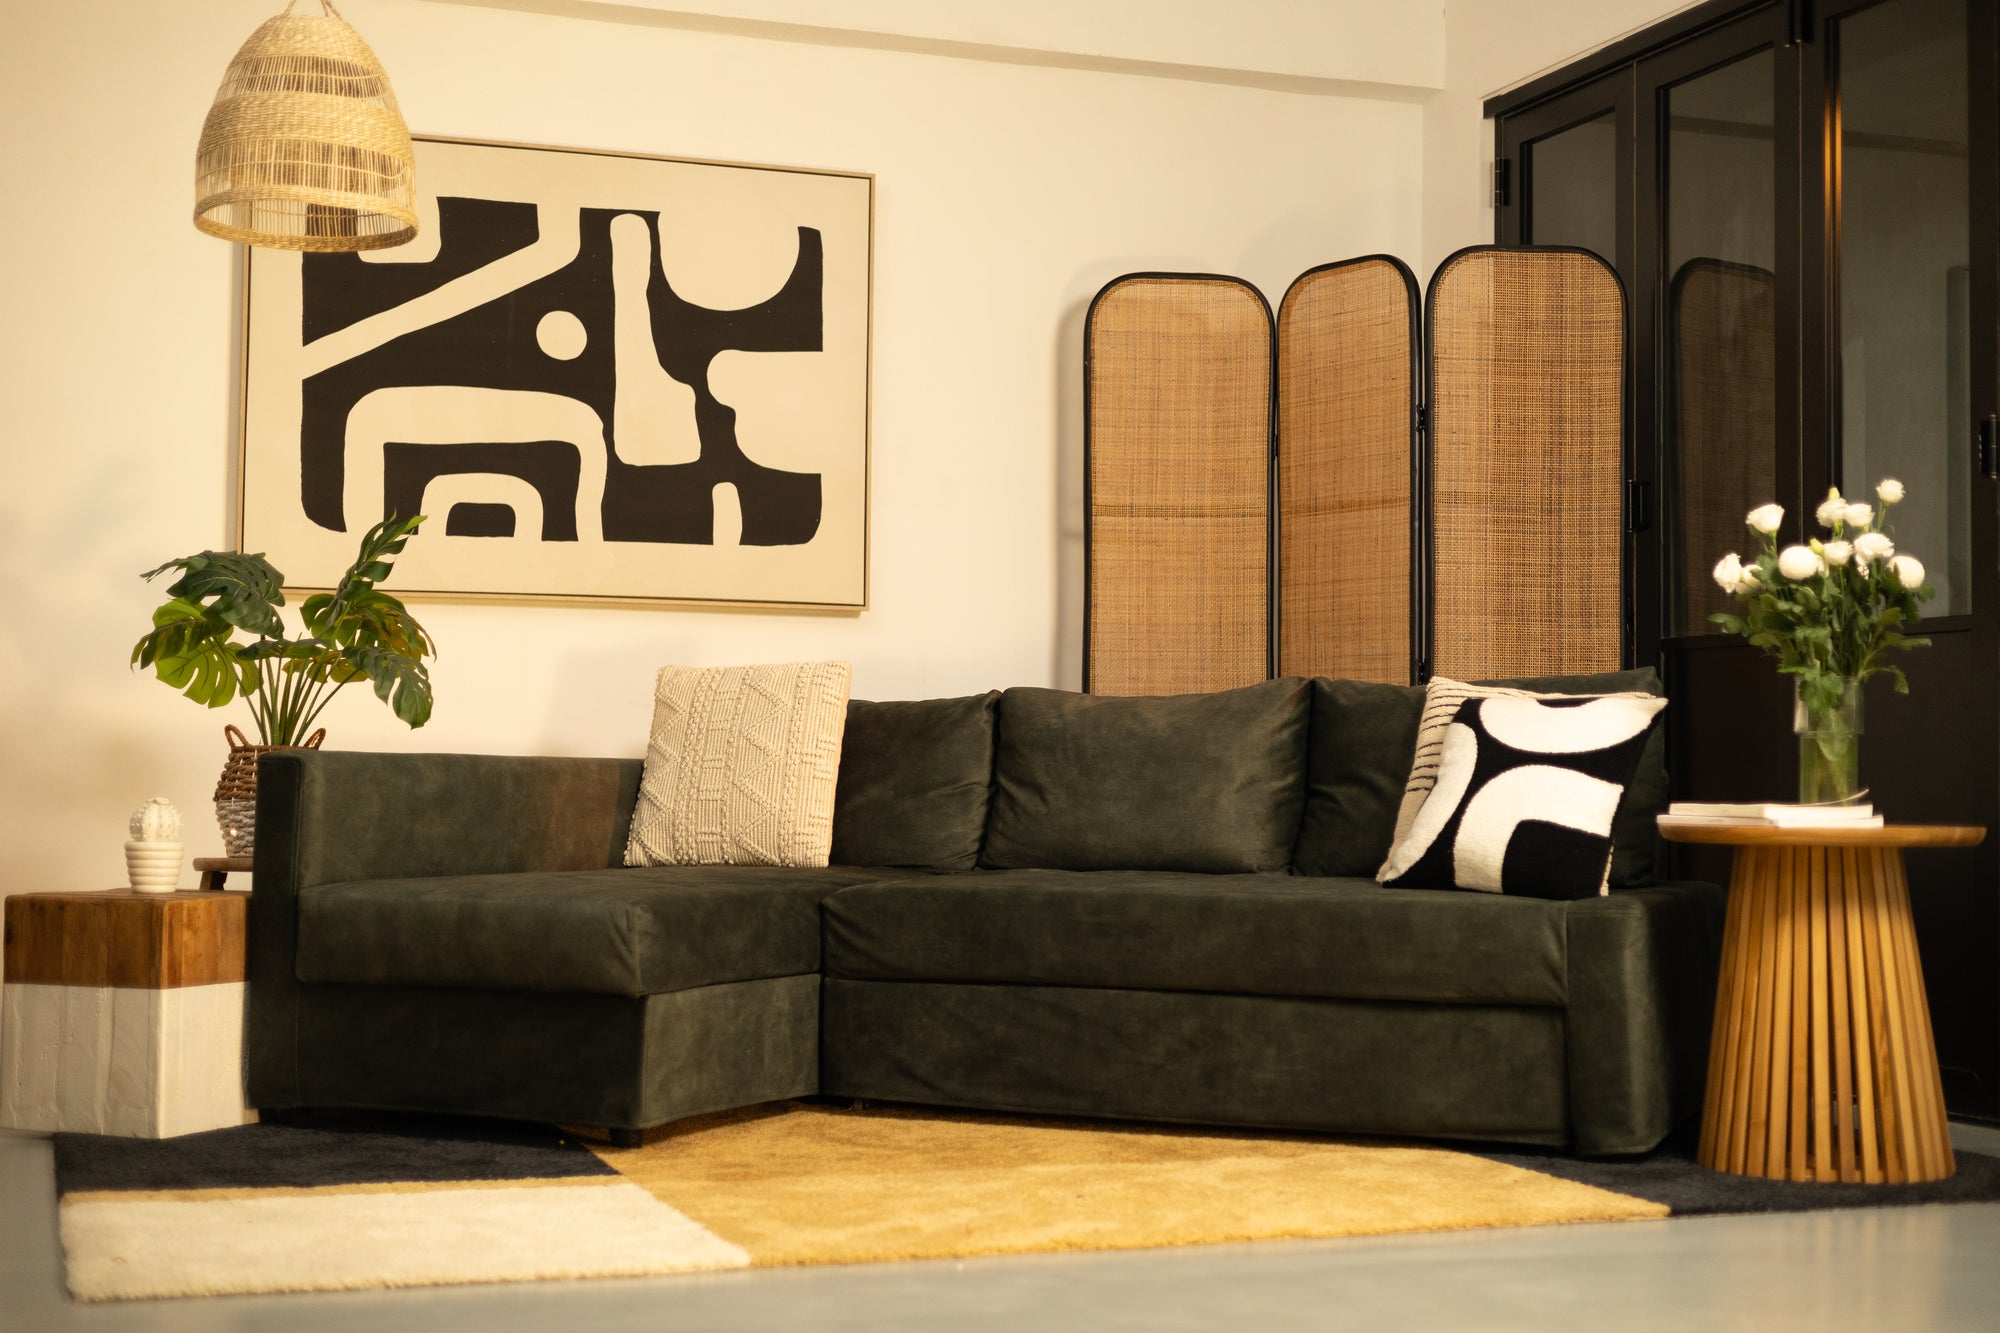 An IKEA Friheten corner sofa bed in a stylish, modern living room